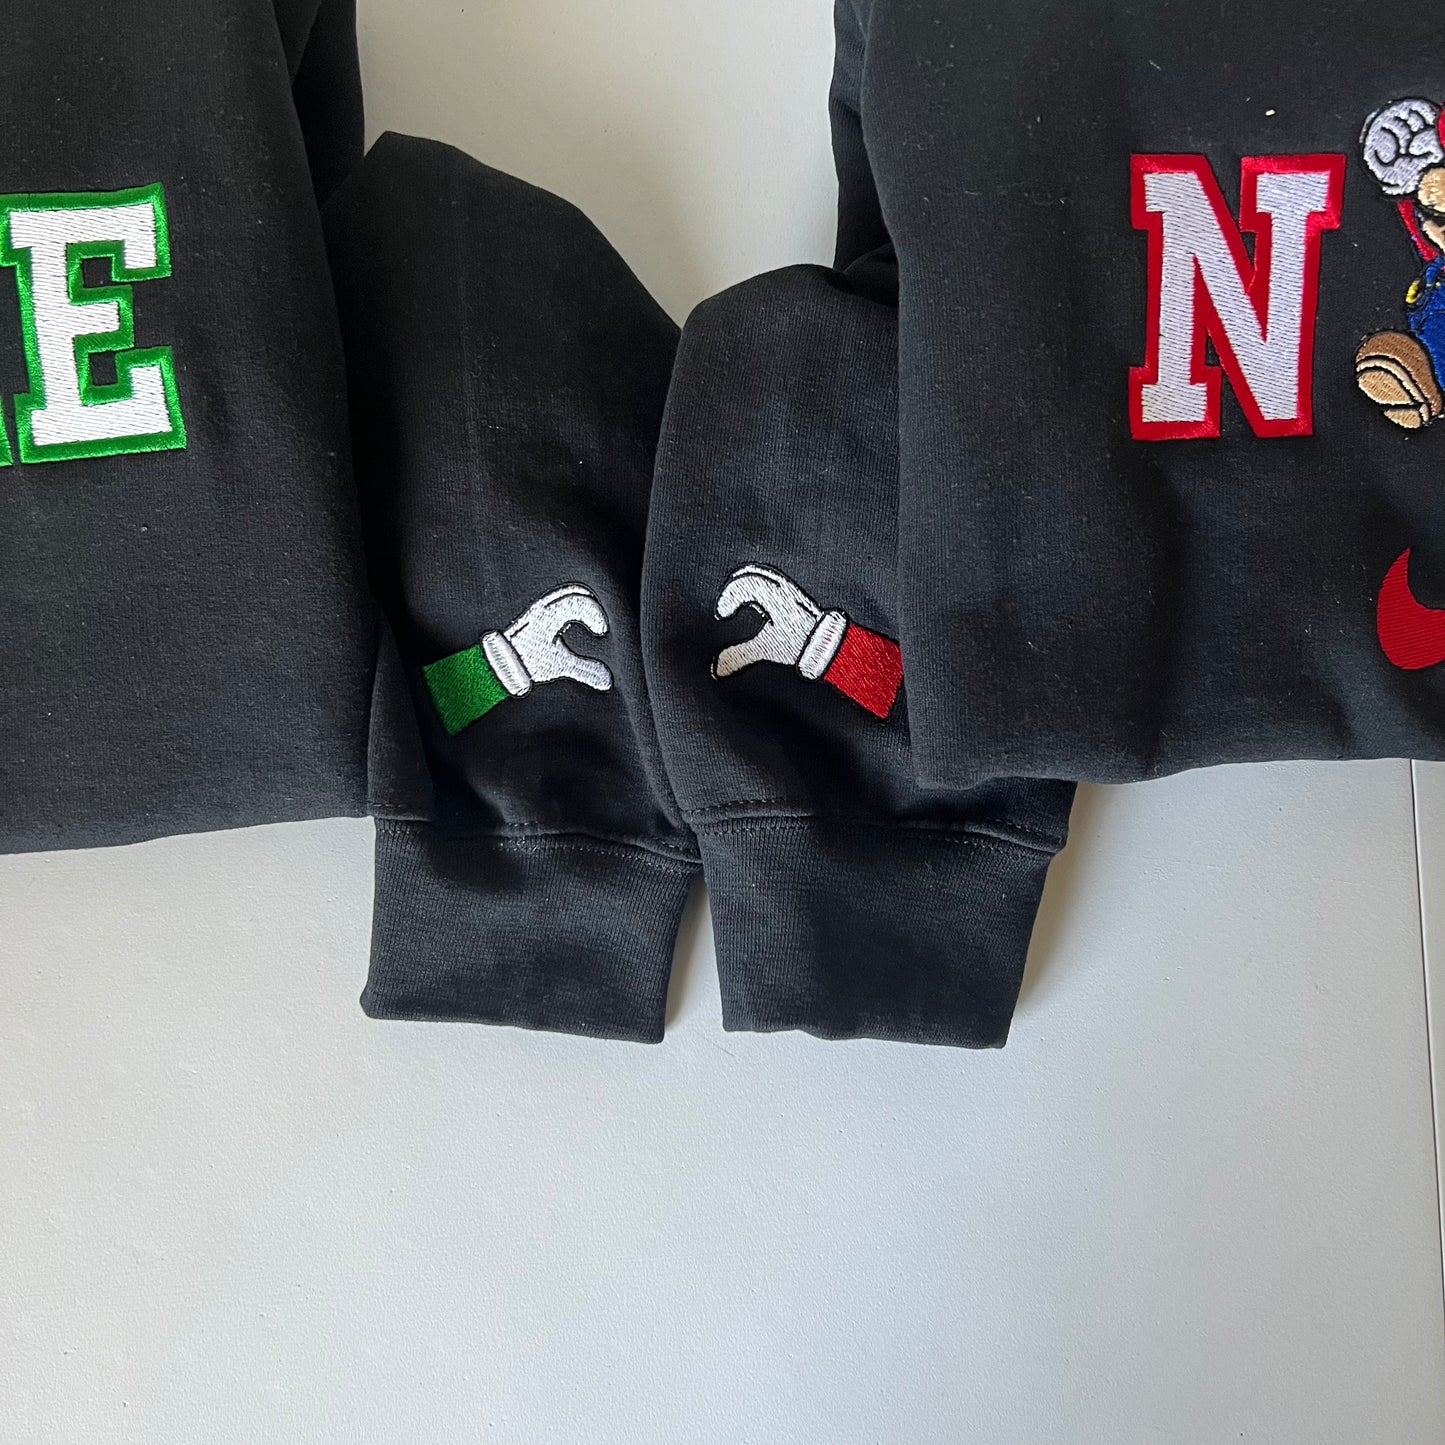 Luigi y Mario inspired embroidered sweaters, matching sweatshirts, couple hoodies